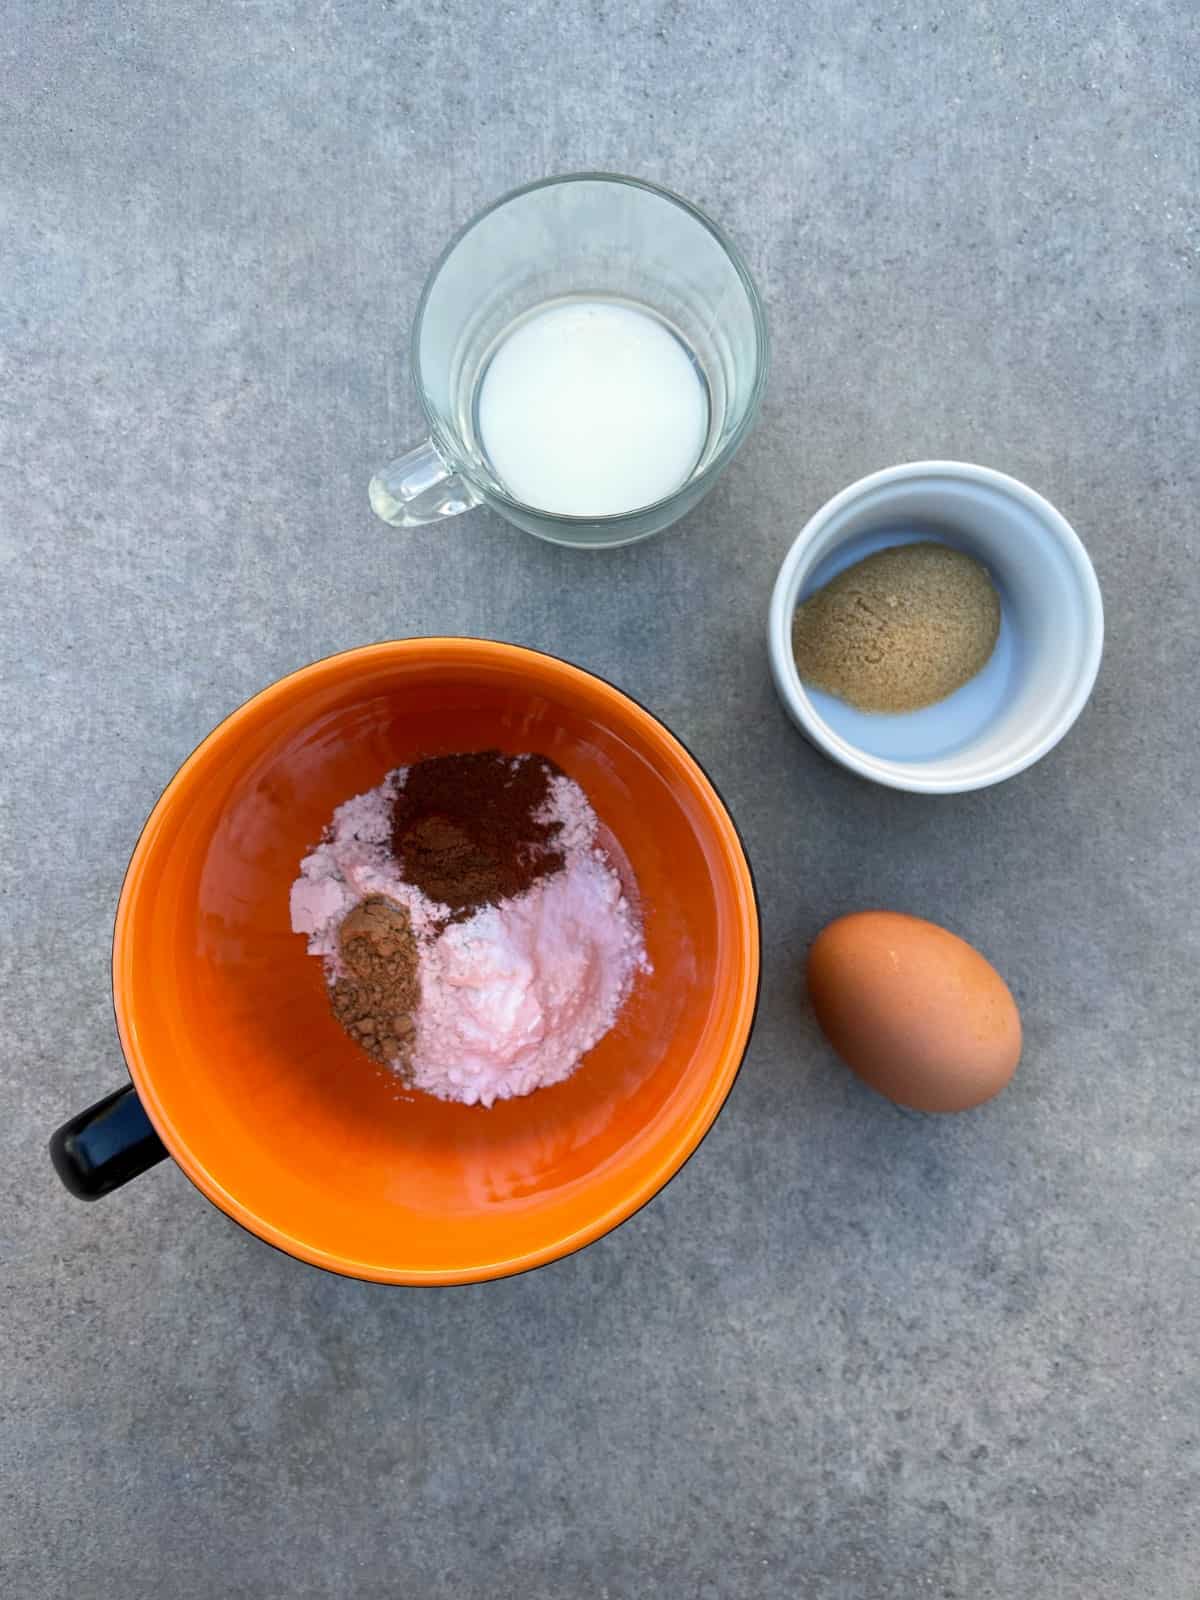 Ingredients for making gingerbread mug including milk, Truvia brown sugar blend, egg, flour and spices in orange mug.